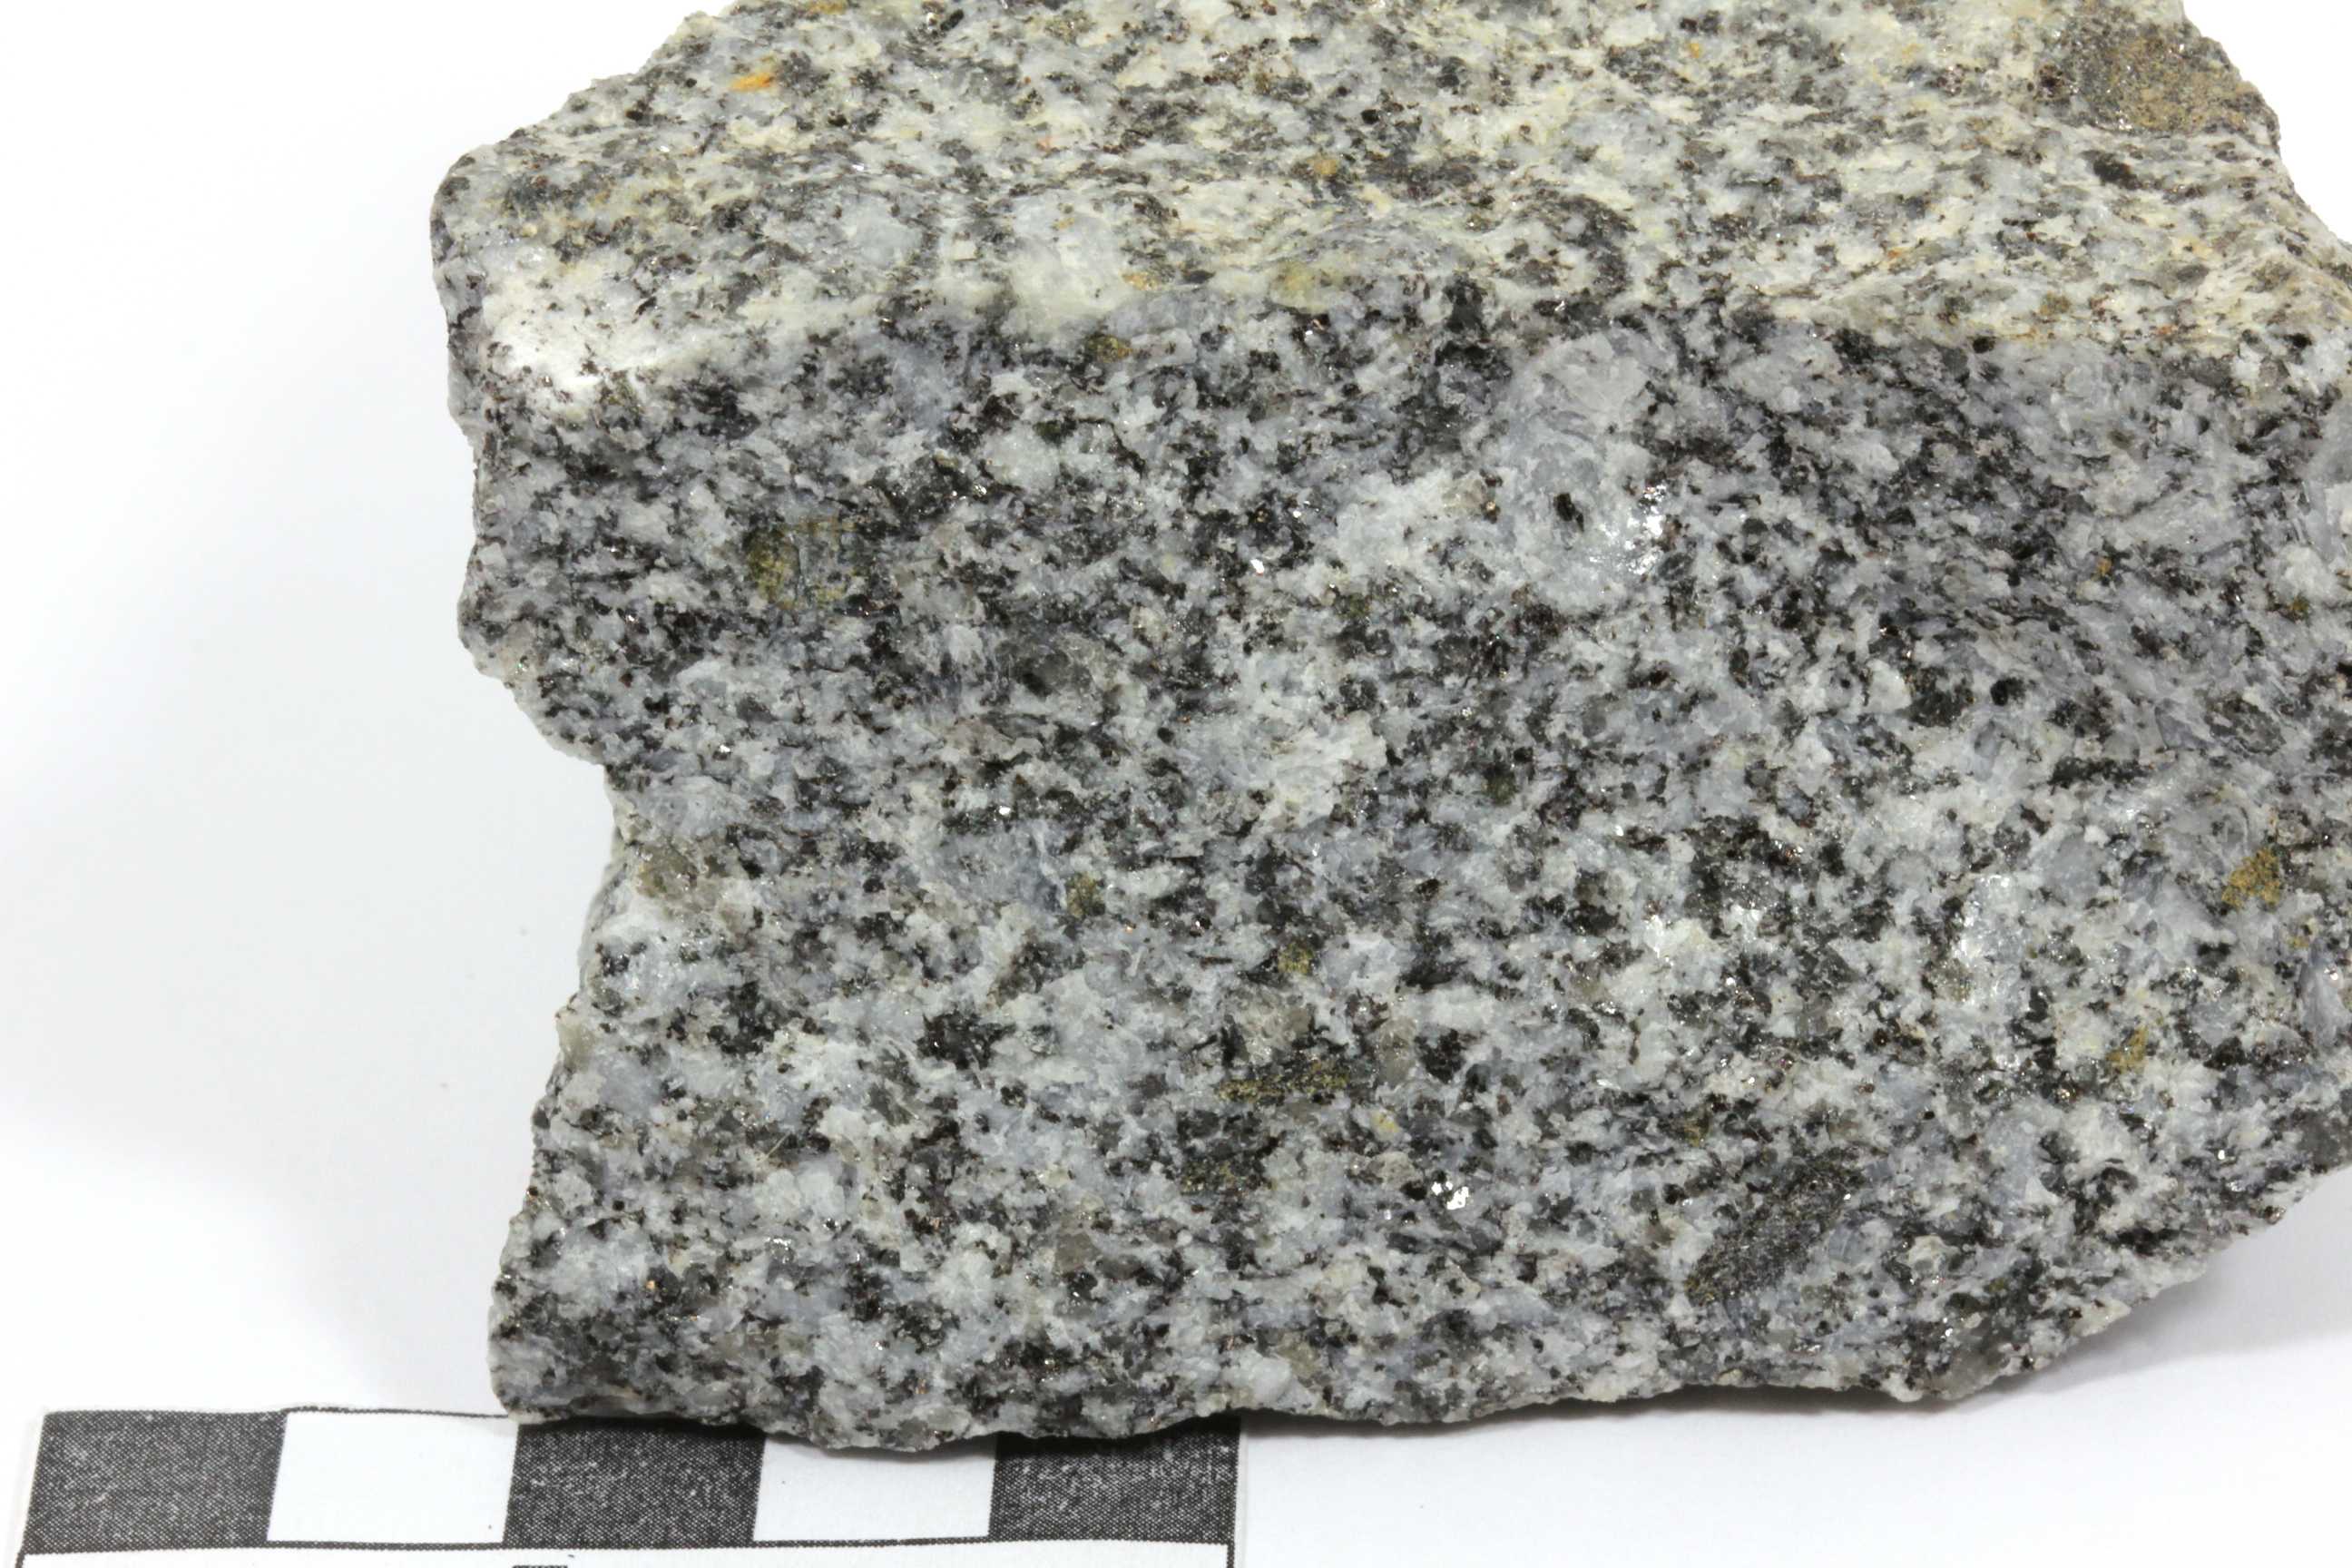 Granite à cordiérite Granite du Cloitre Massif armoricain  Huelgoat Le Cloitre